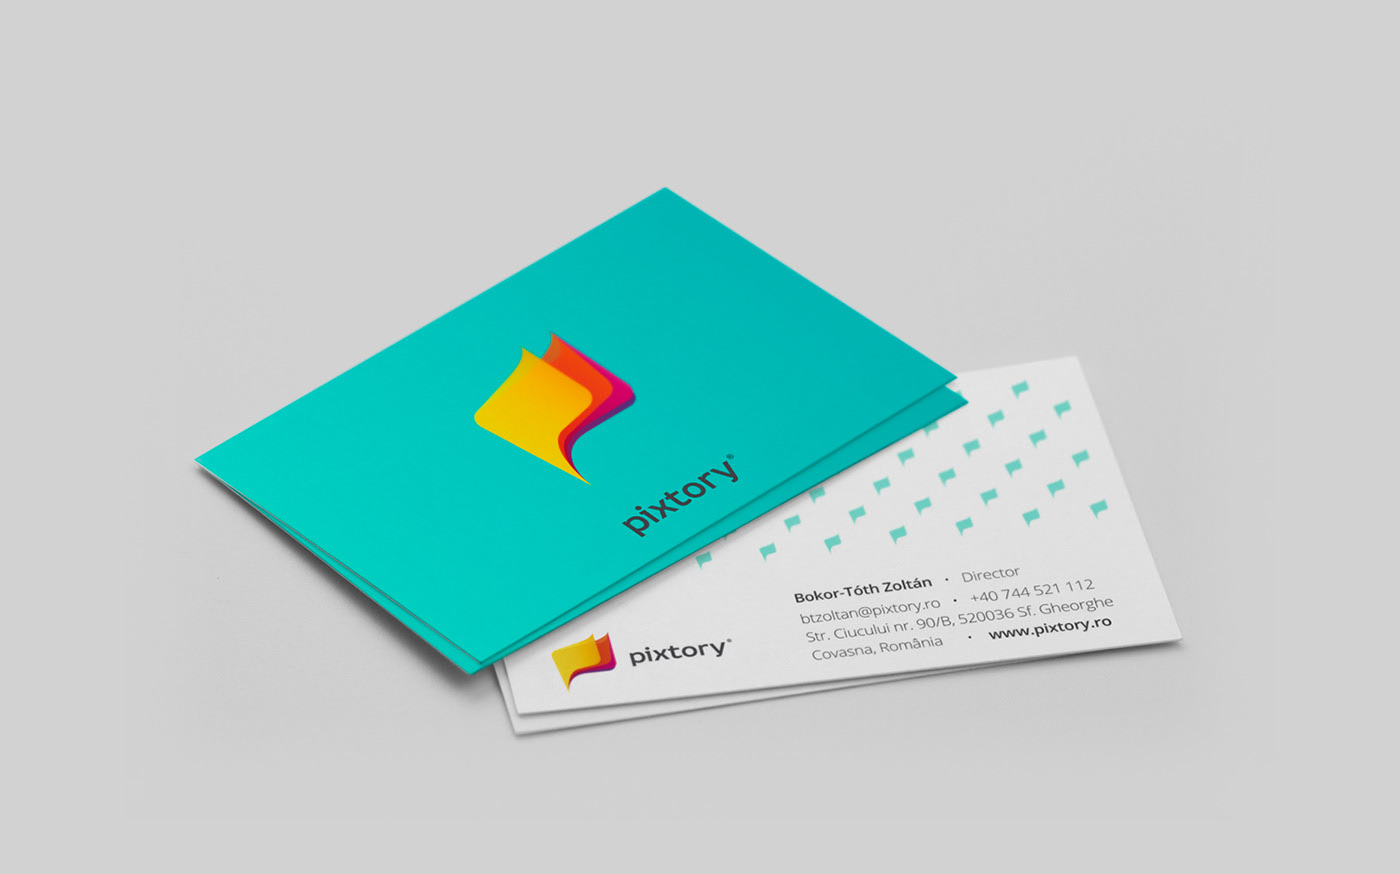 Pixtory [Branding, Web Design & Development] on Behance